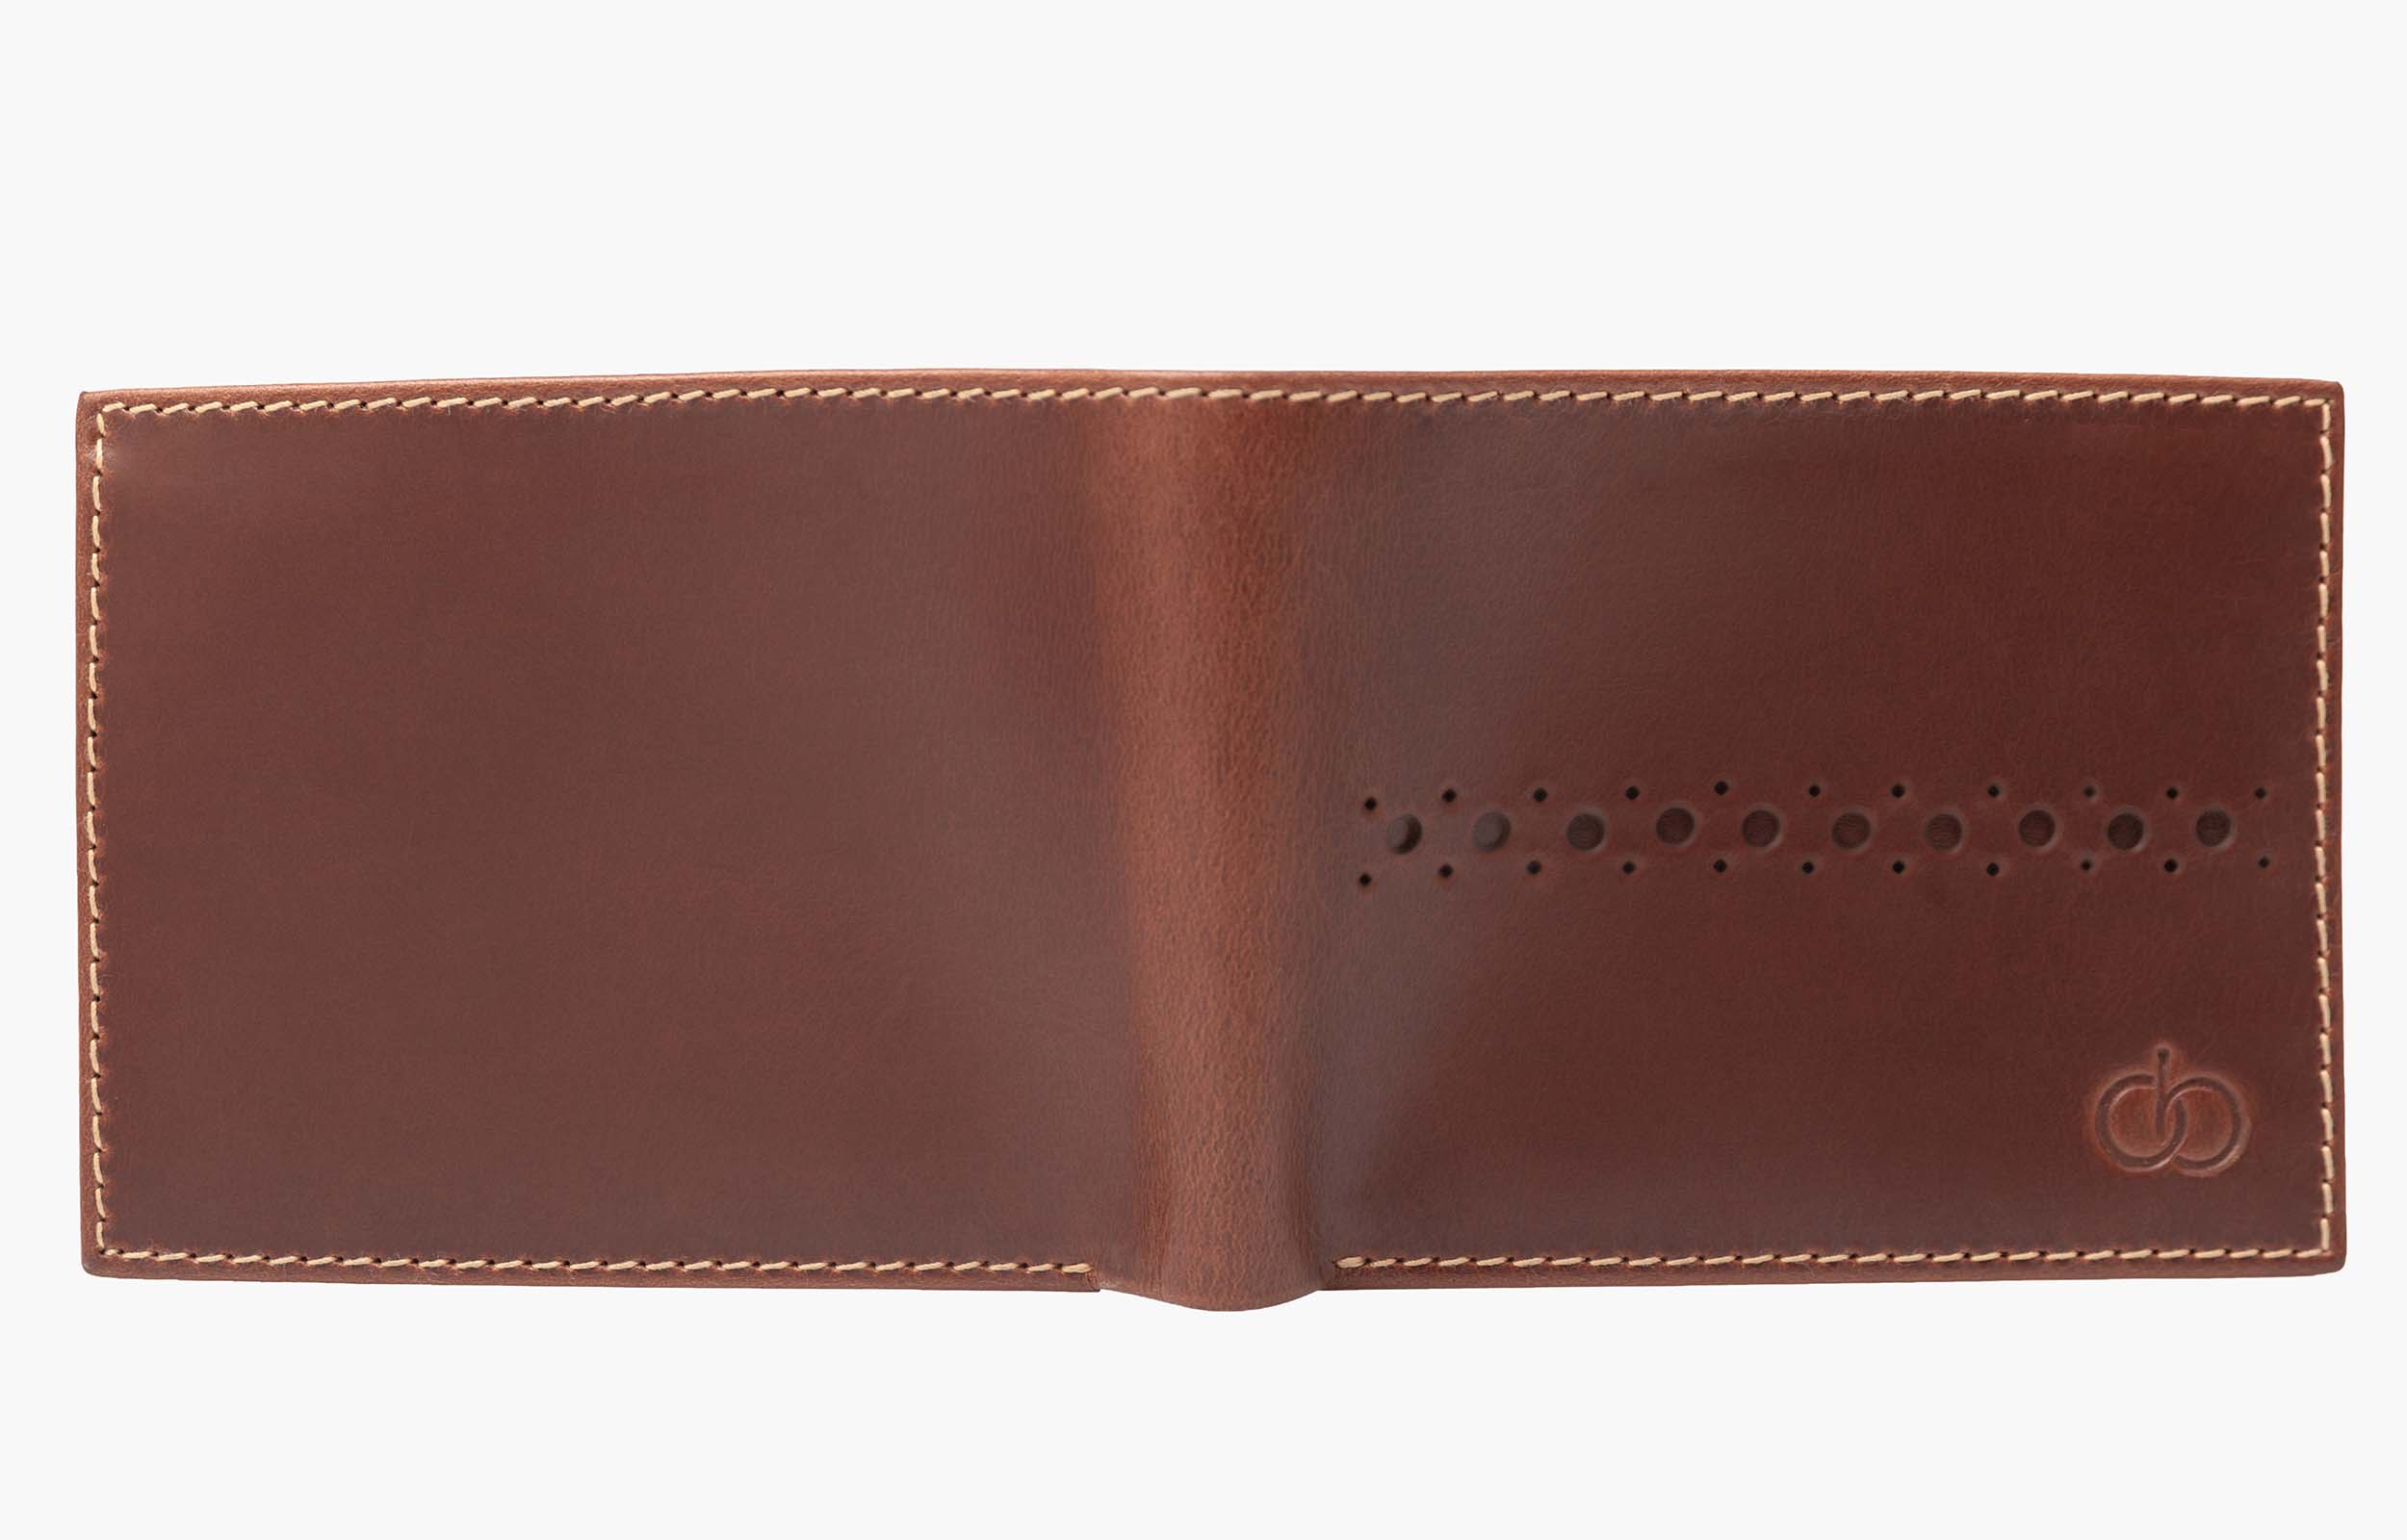 Pluto Geneva Brown Leather wallet UK 4